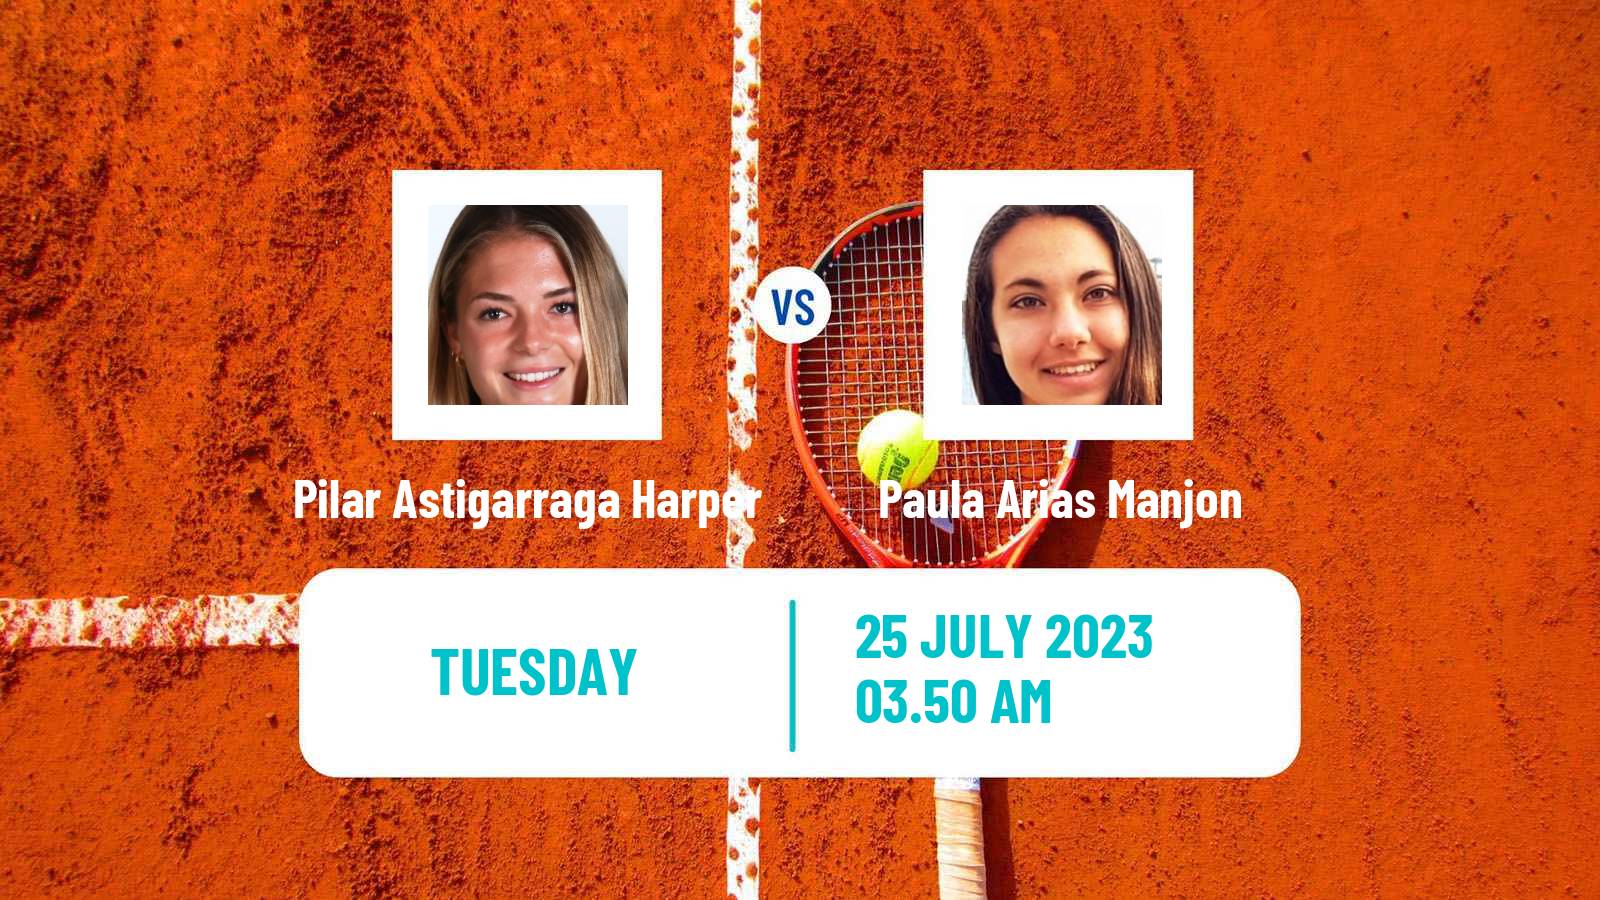 Tennis ITF W25 El Espinar Segovia Women Pilar Astigarraga Harper - Paula Arias Manjon